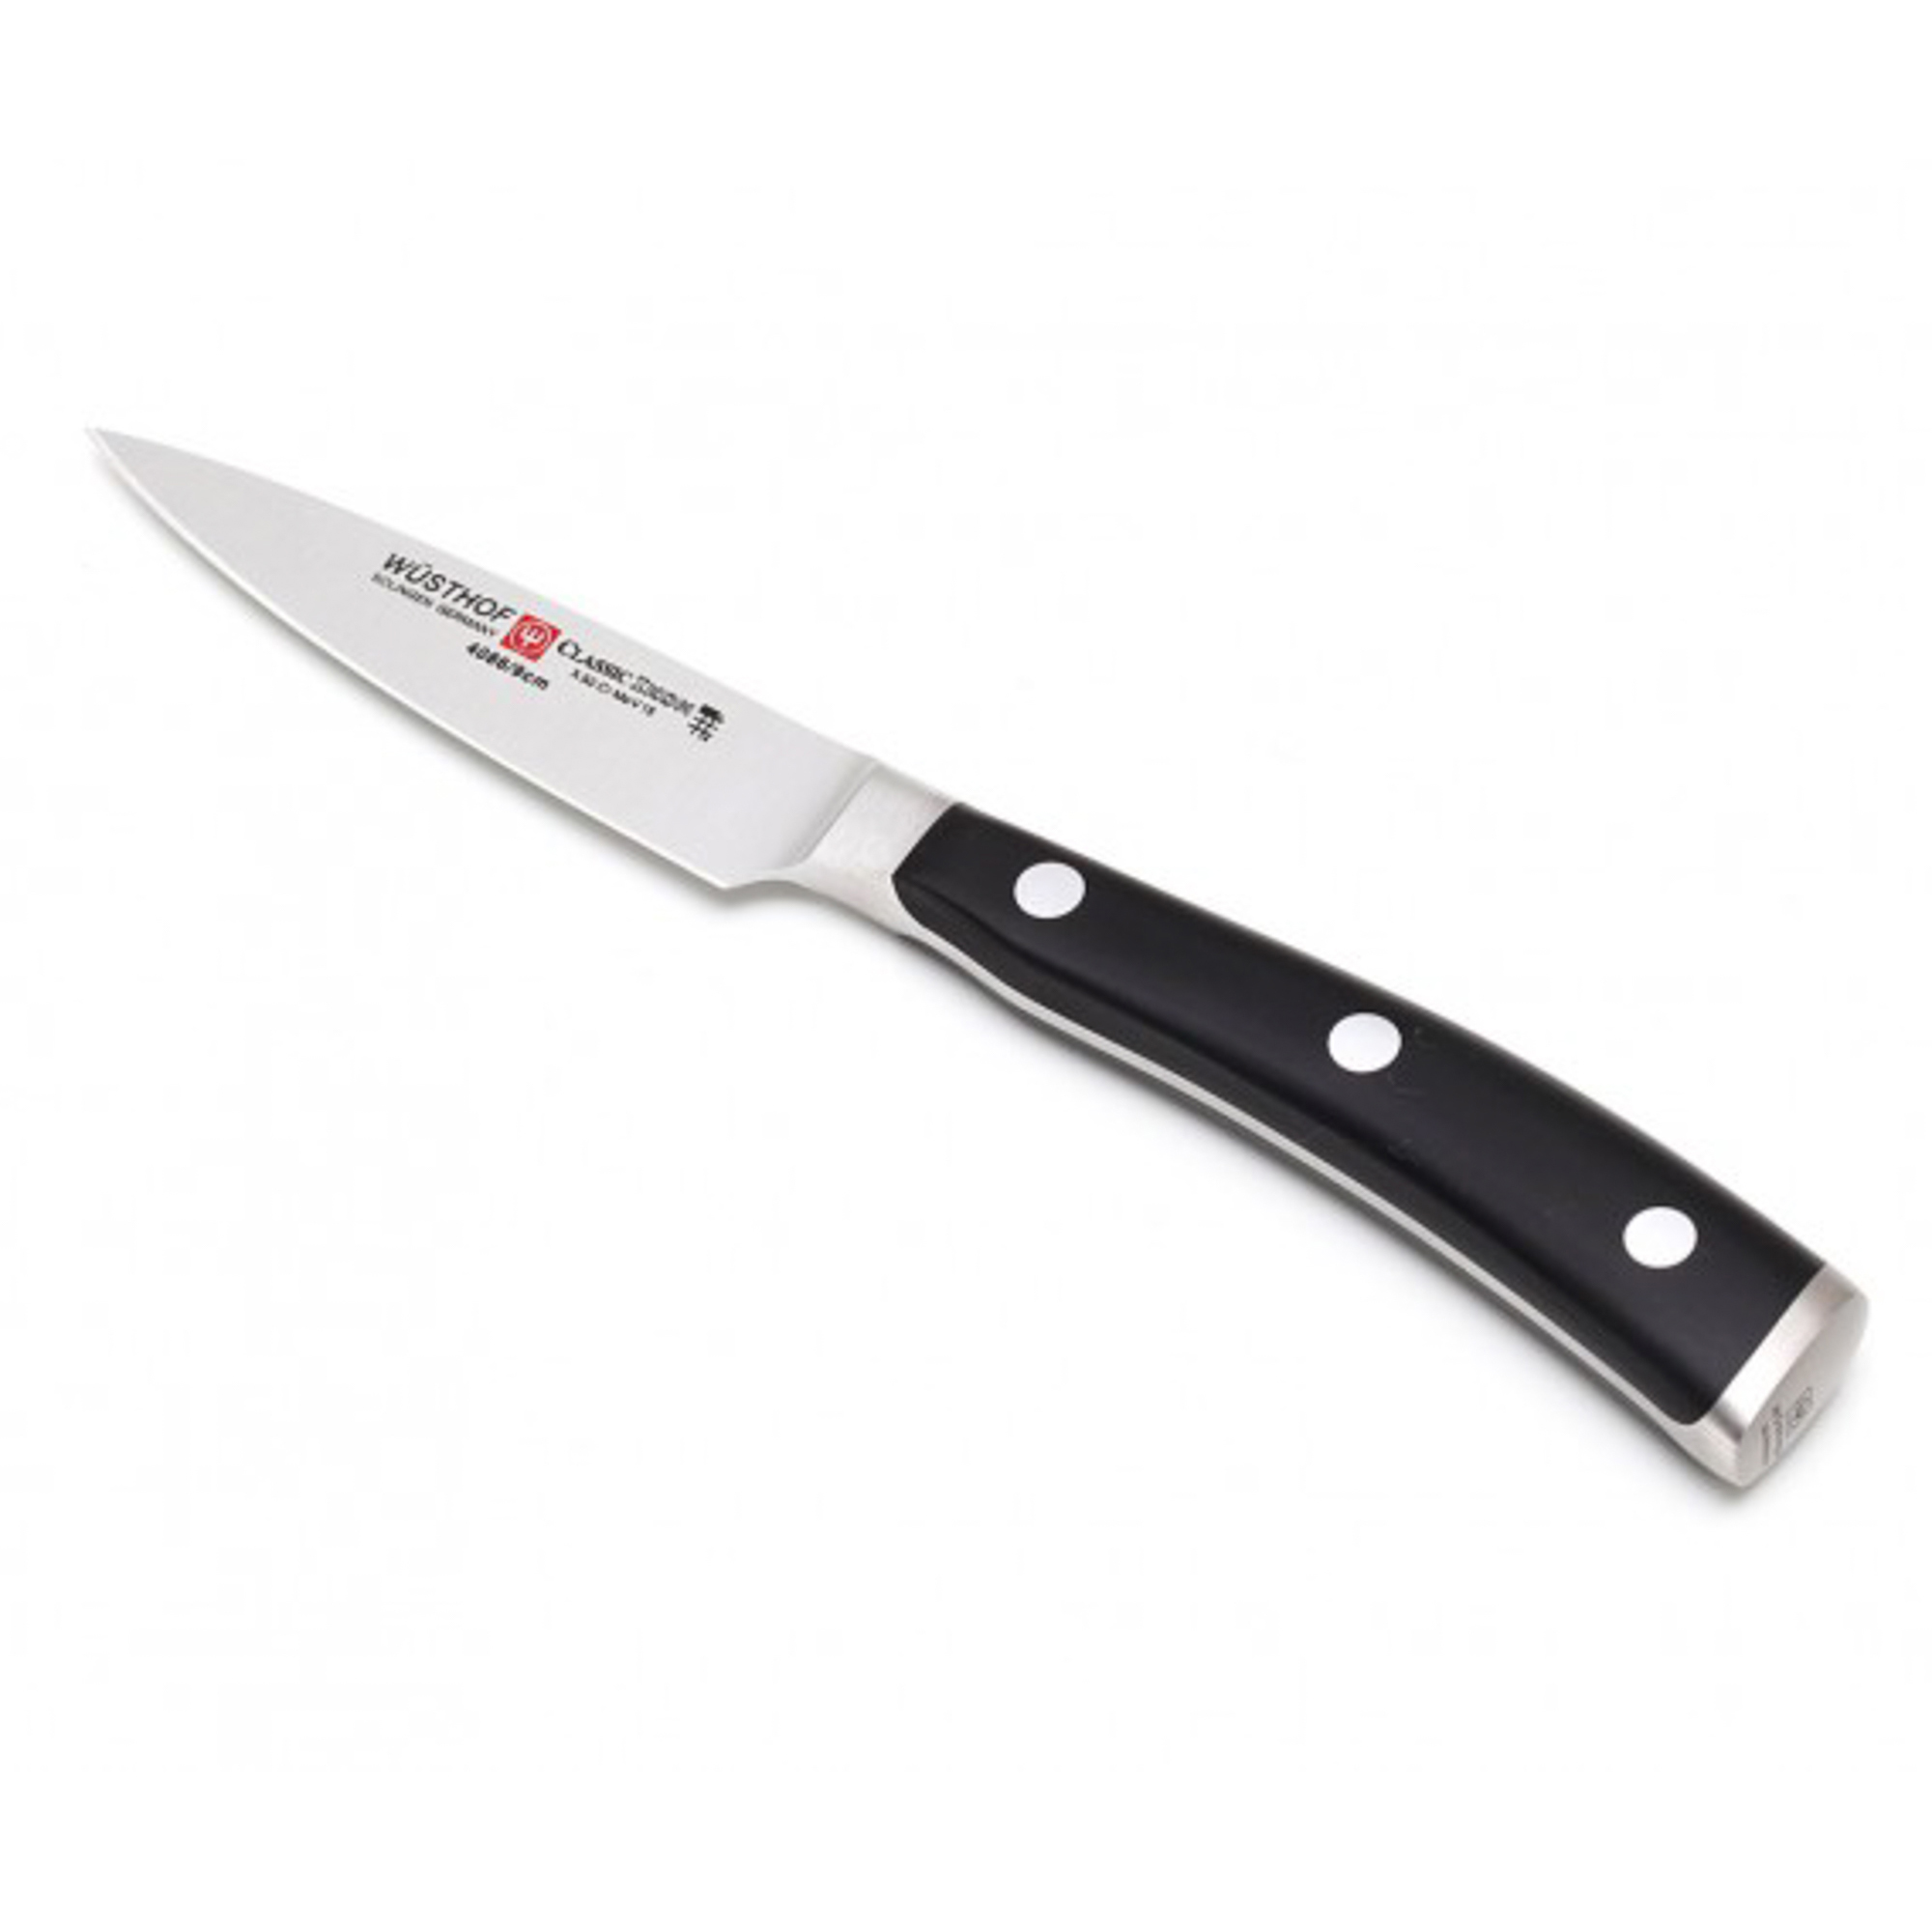 Нож Овощной 9 см Wusthoff classic ikon нож овощной henckels 31020 131